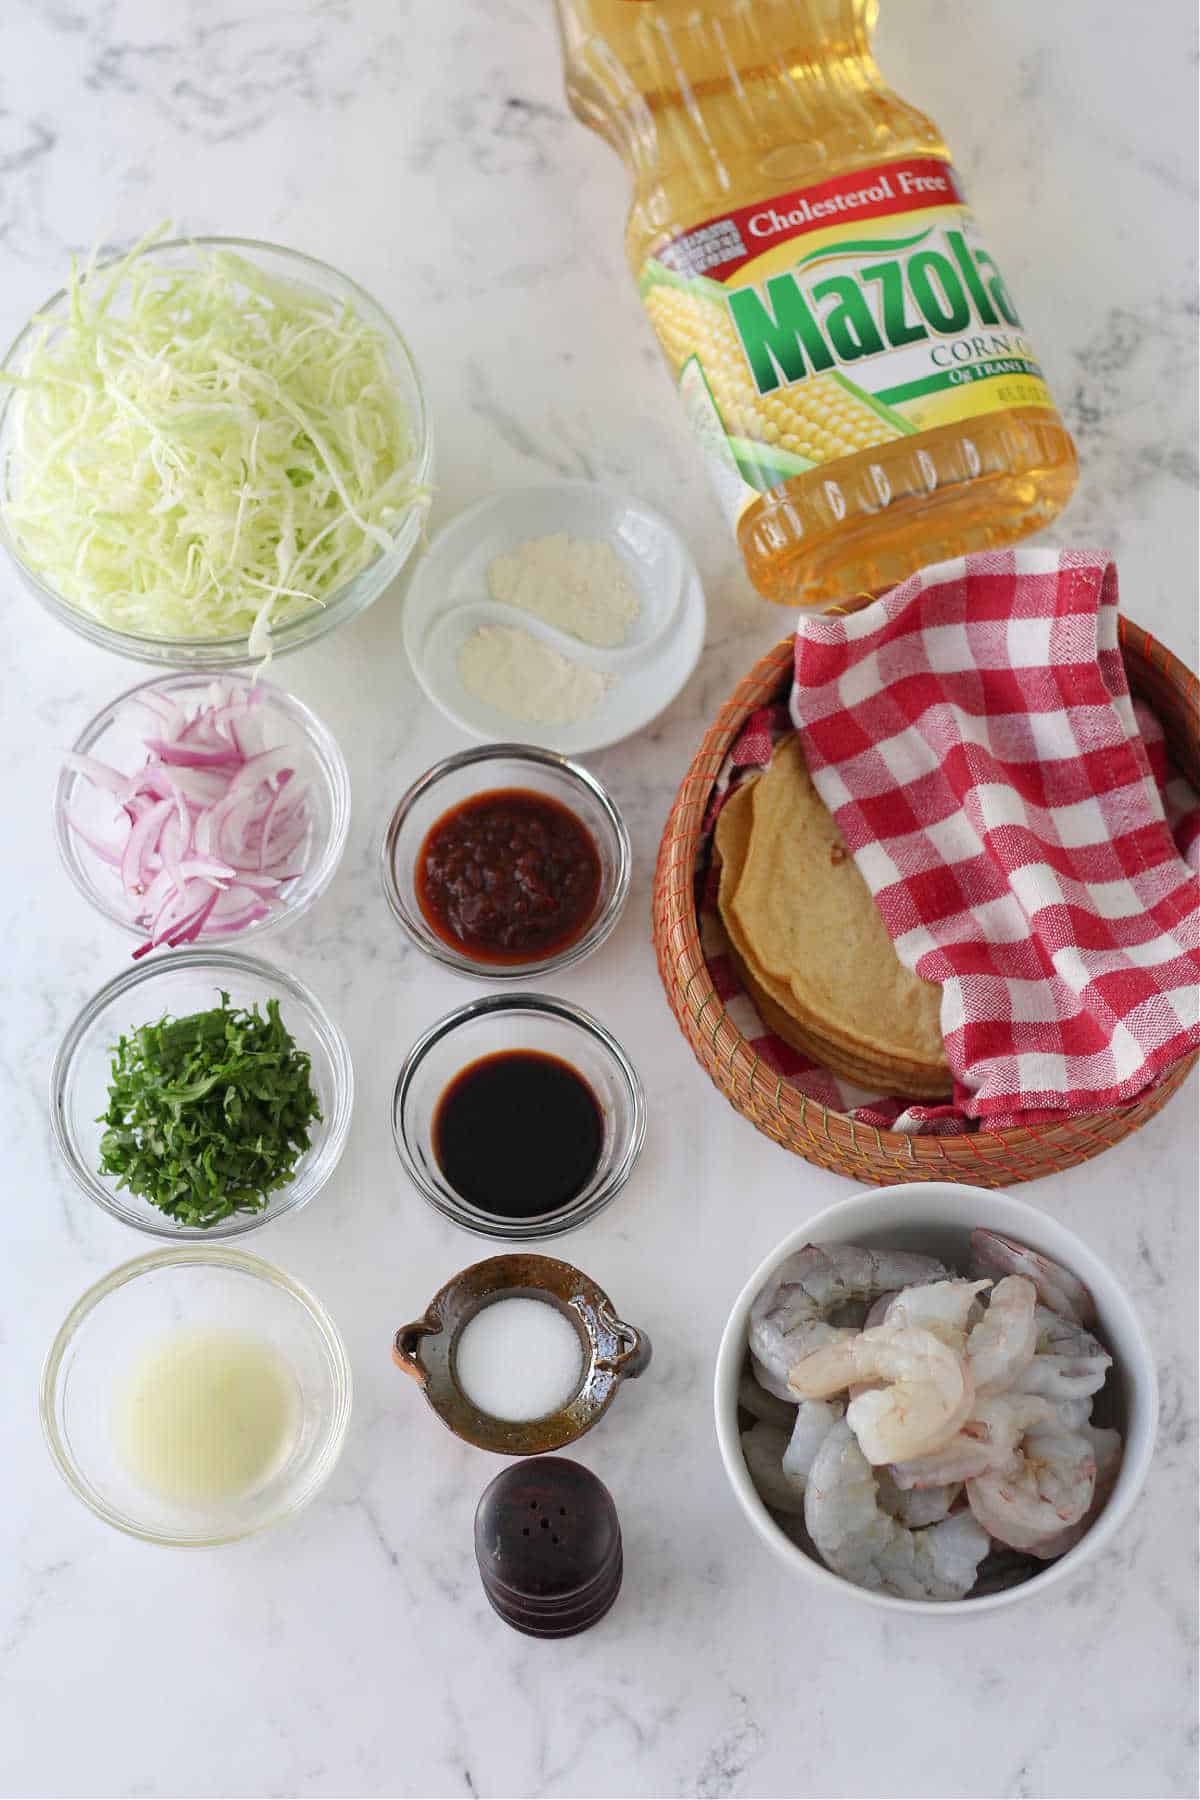 Chipotle shrimp tacos ingredients